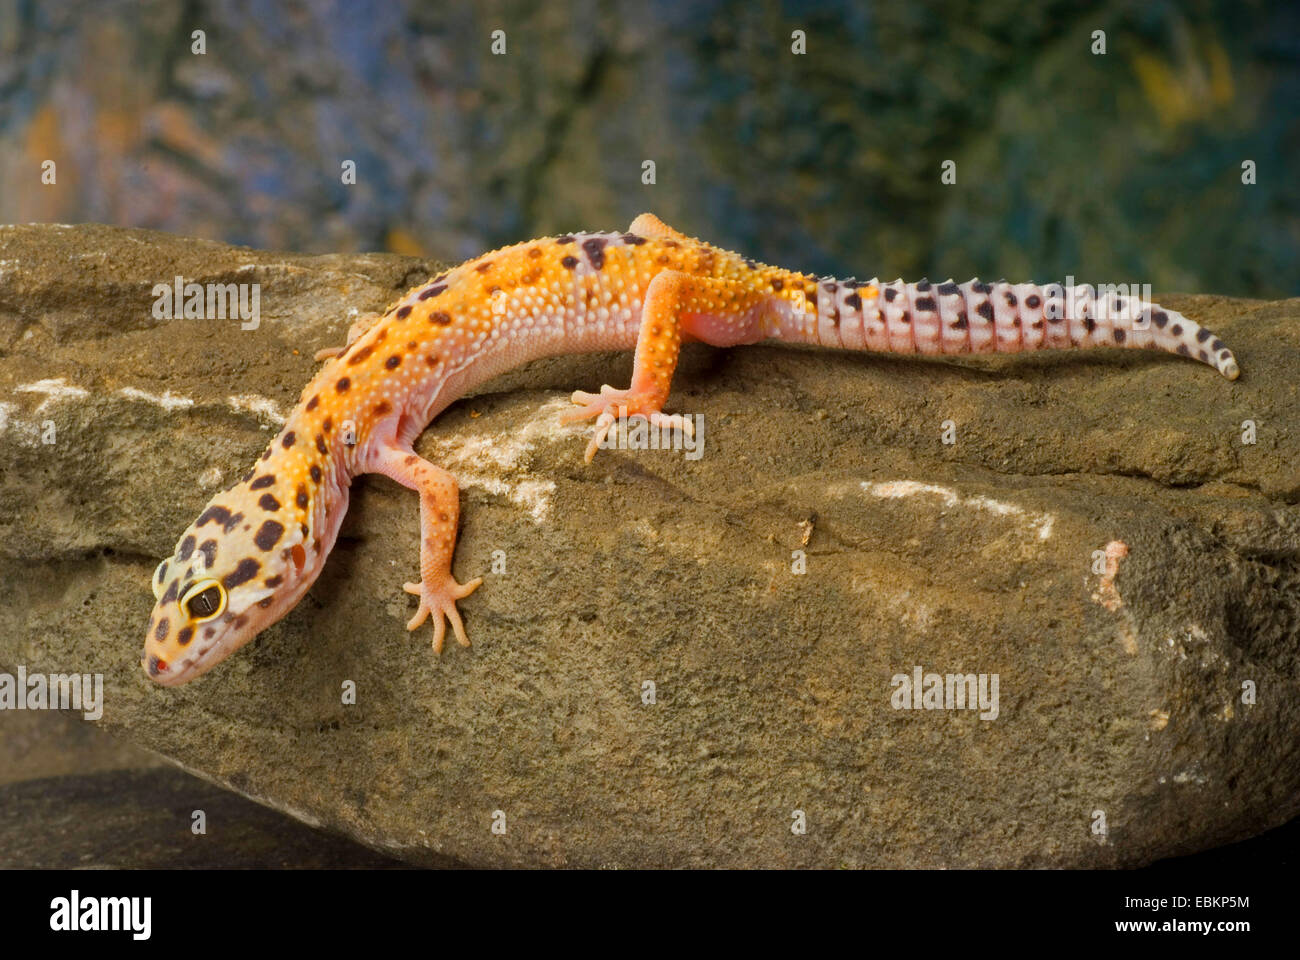 Leopard gecko (Eublepharis macularius), breed Enigma on a stone Stock Photo